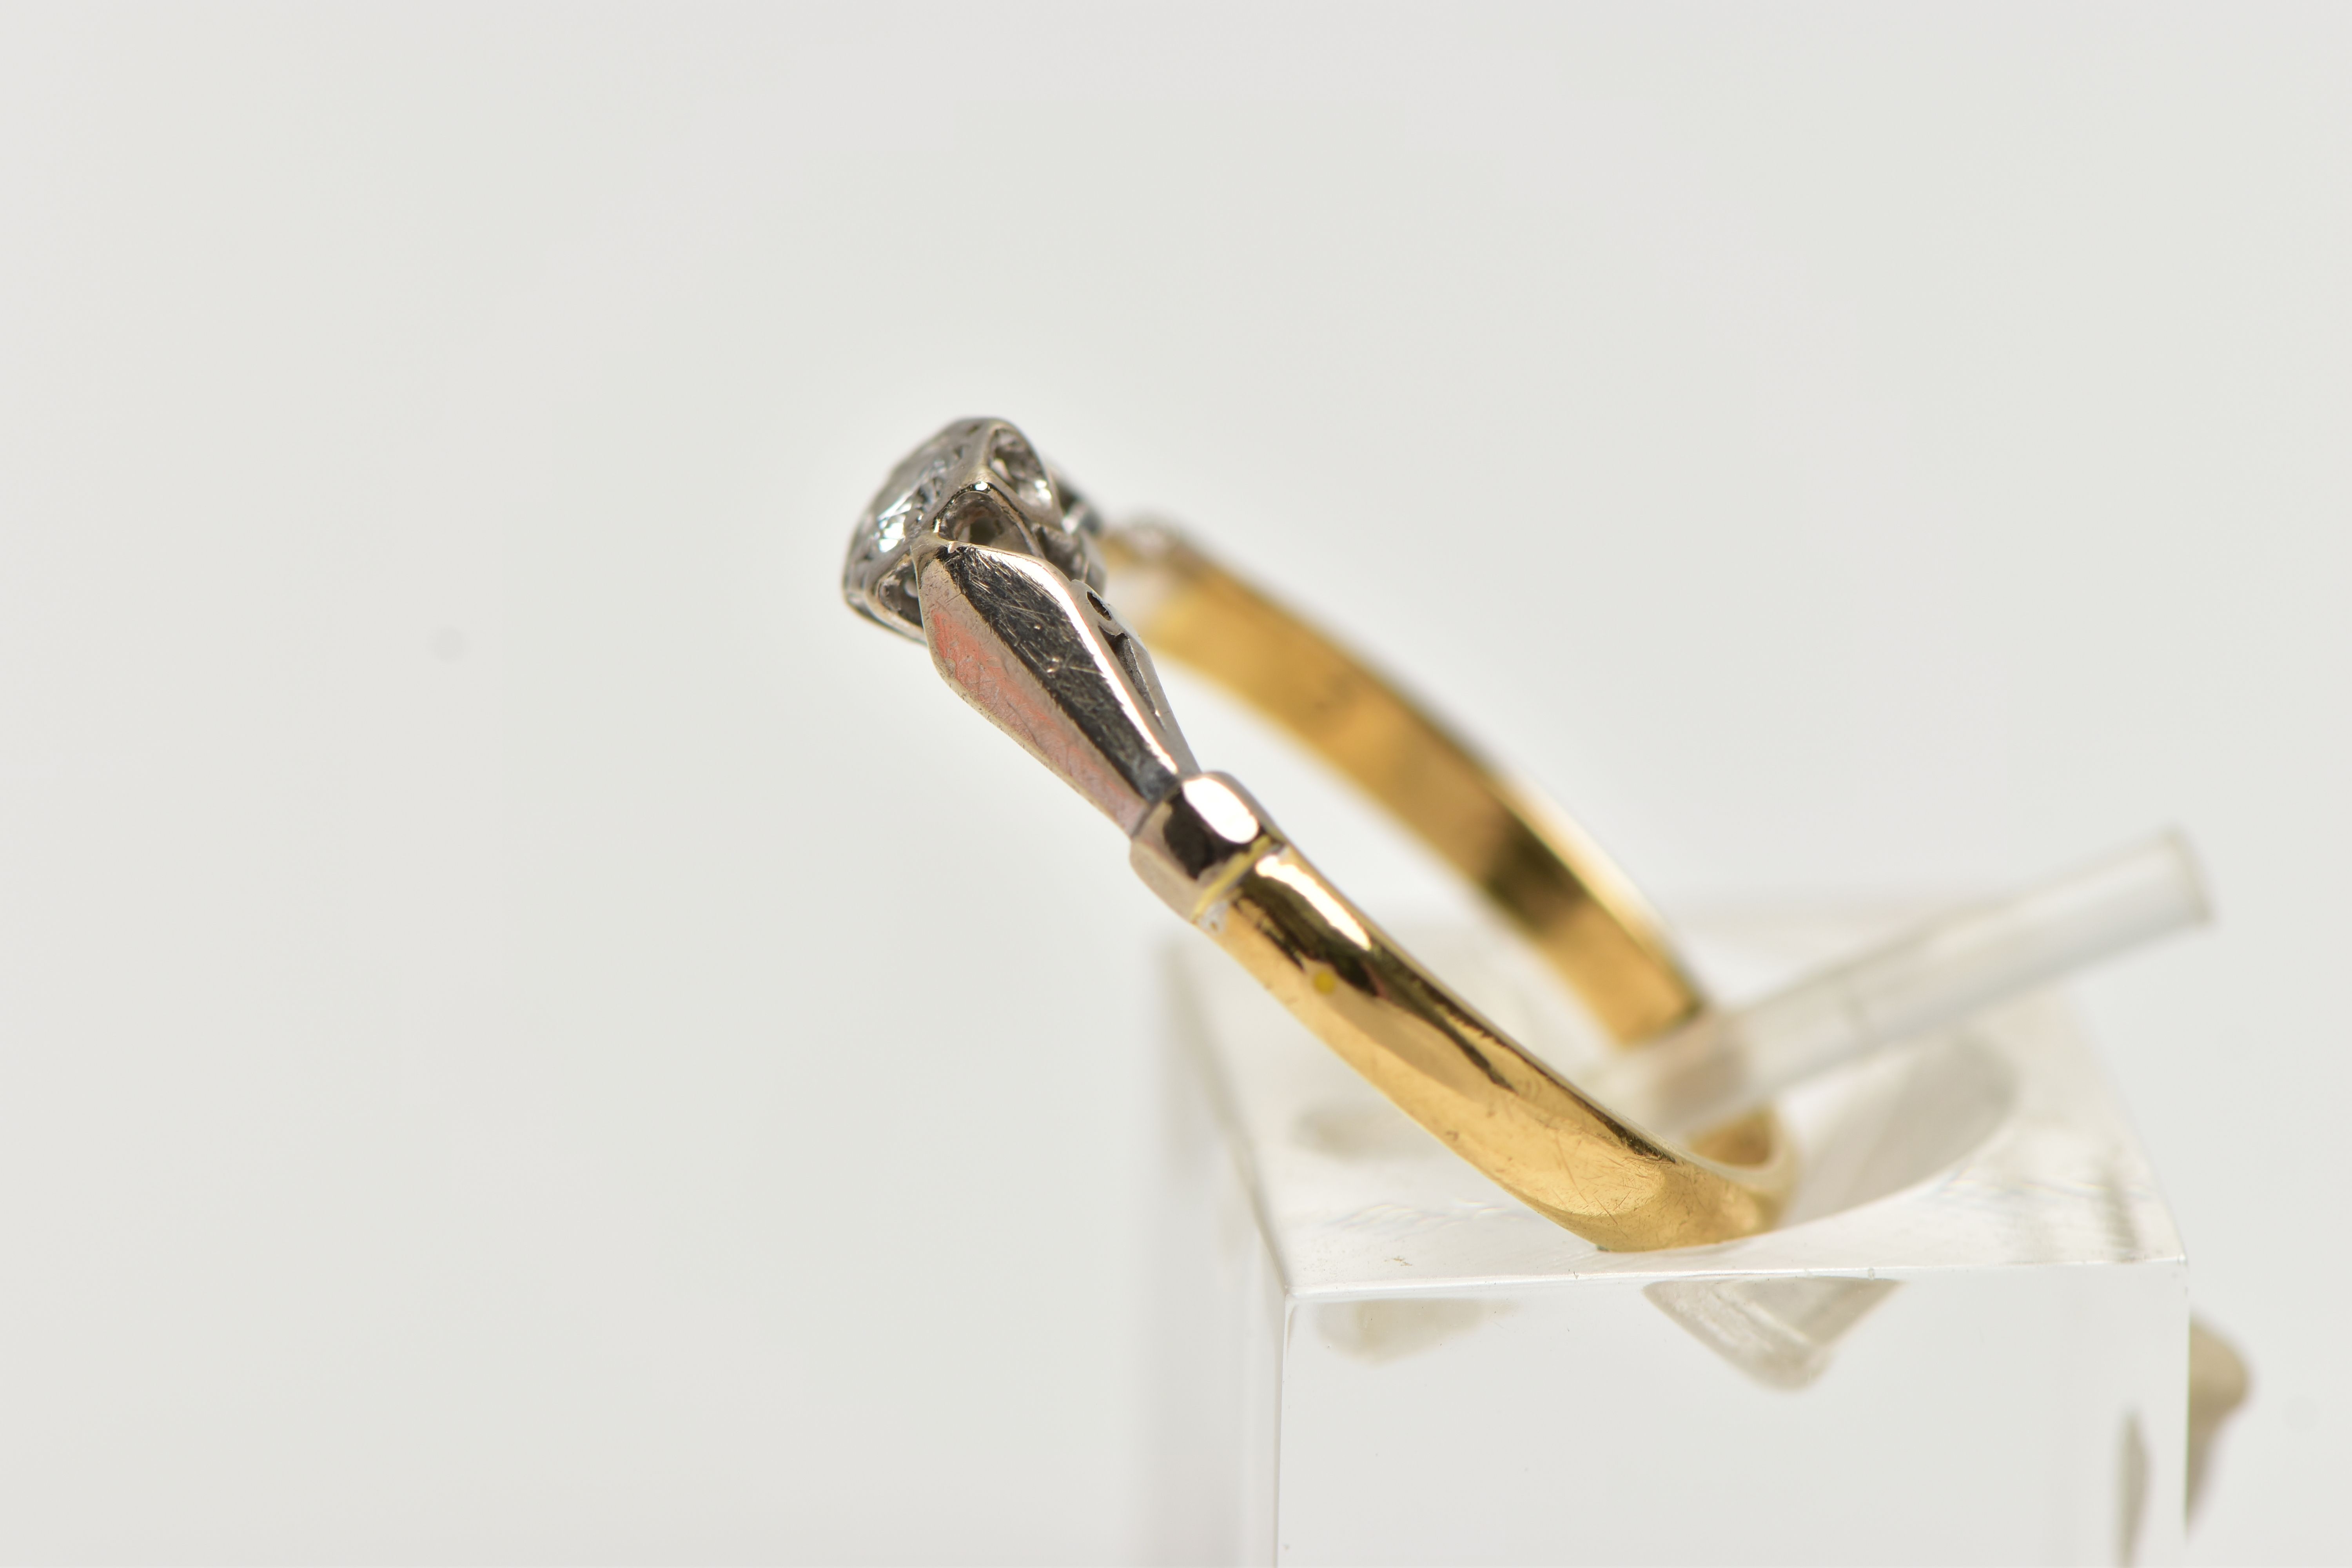 AN 18CT GOLD, SINGLE STONE DIAMOND RING, a round brilliant cut diamond set in a white metal illusion - Image 2 of 4